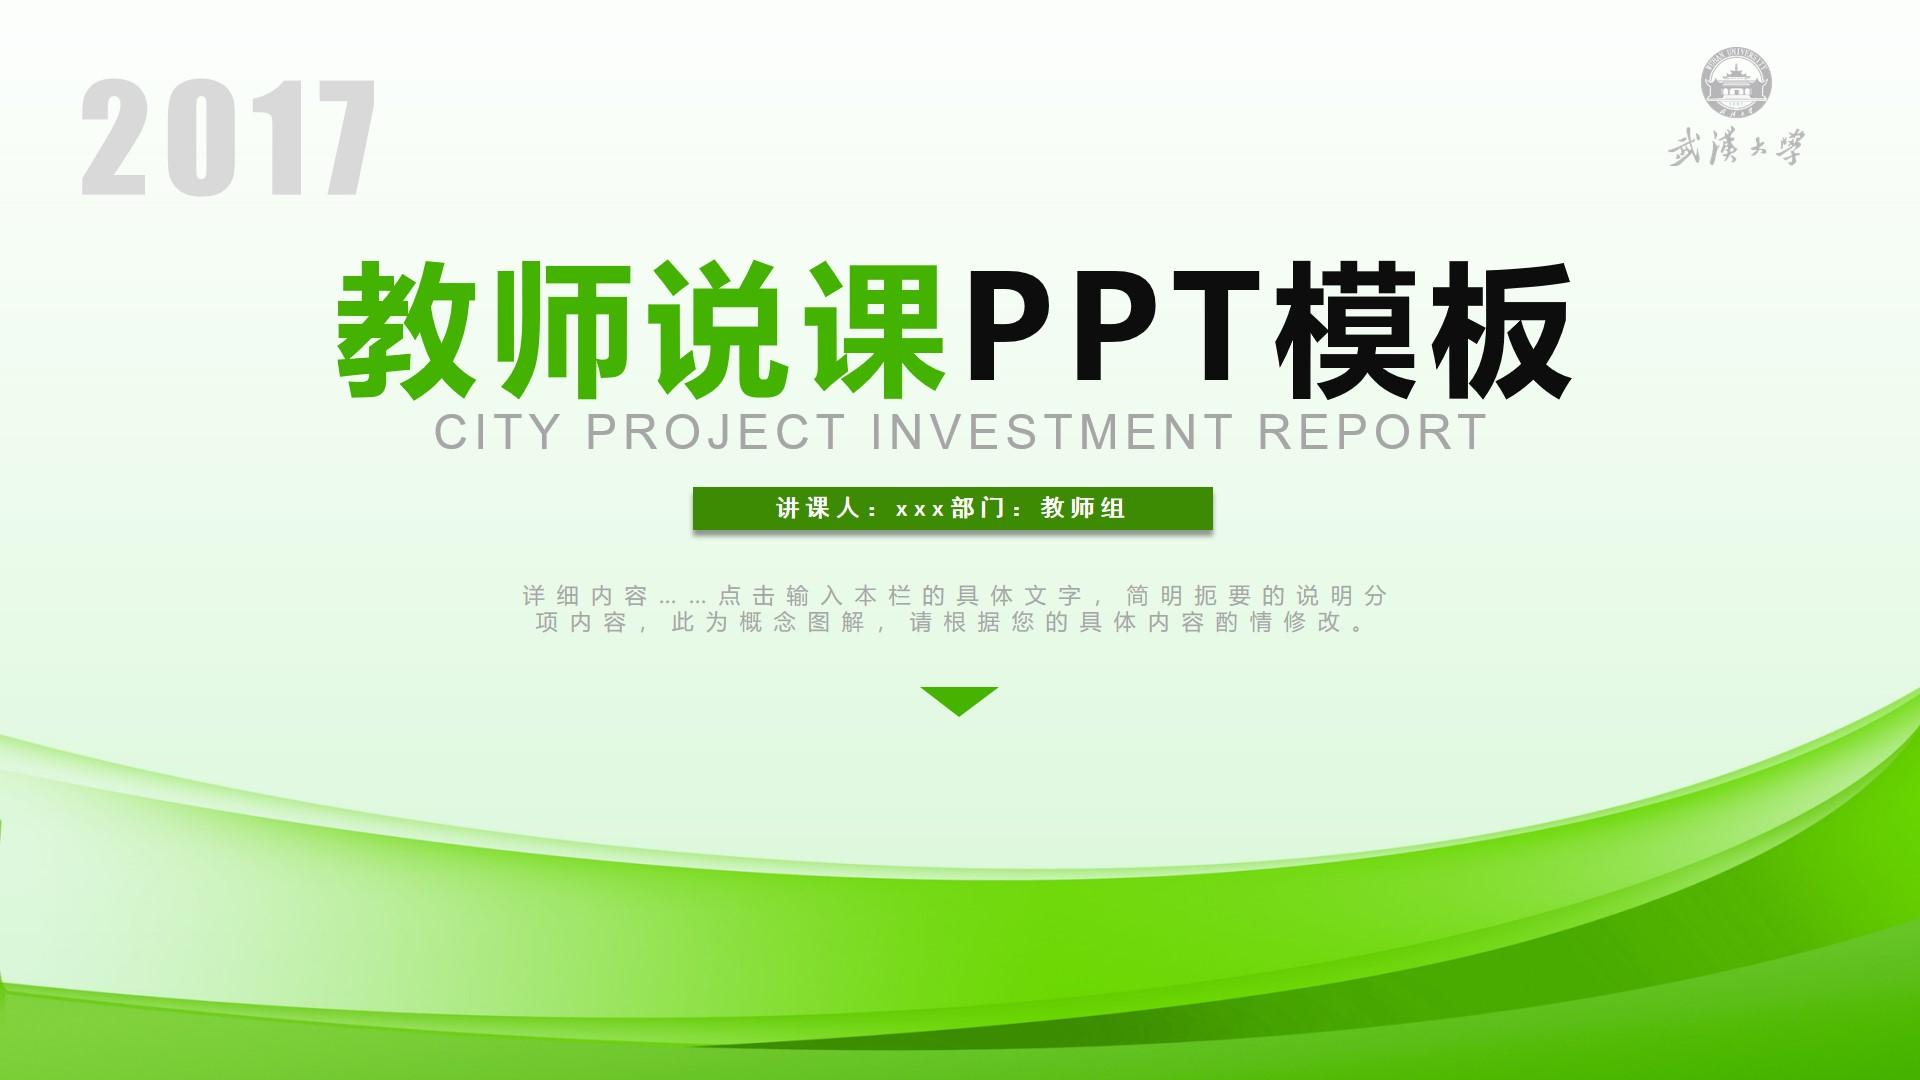 教育教学绿色白色简洁标准模板 city investment project ppt云素材PPT模板1672666109722